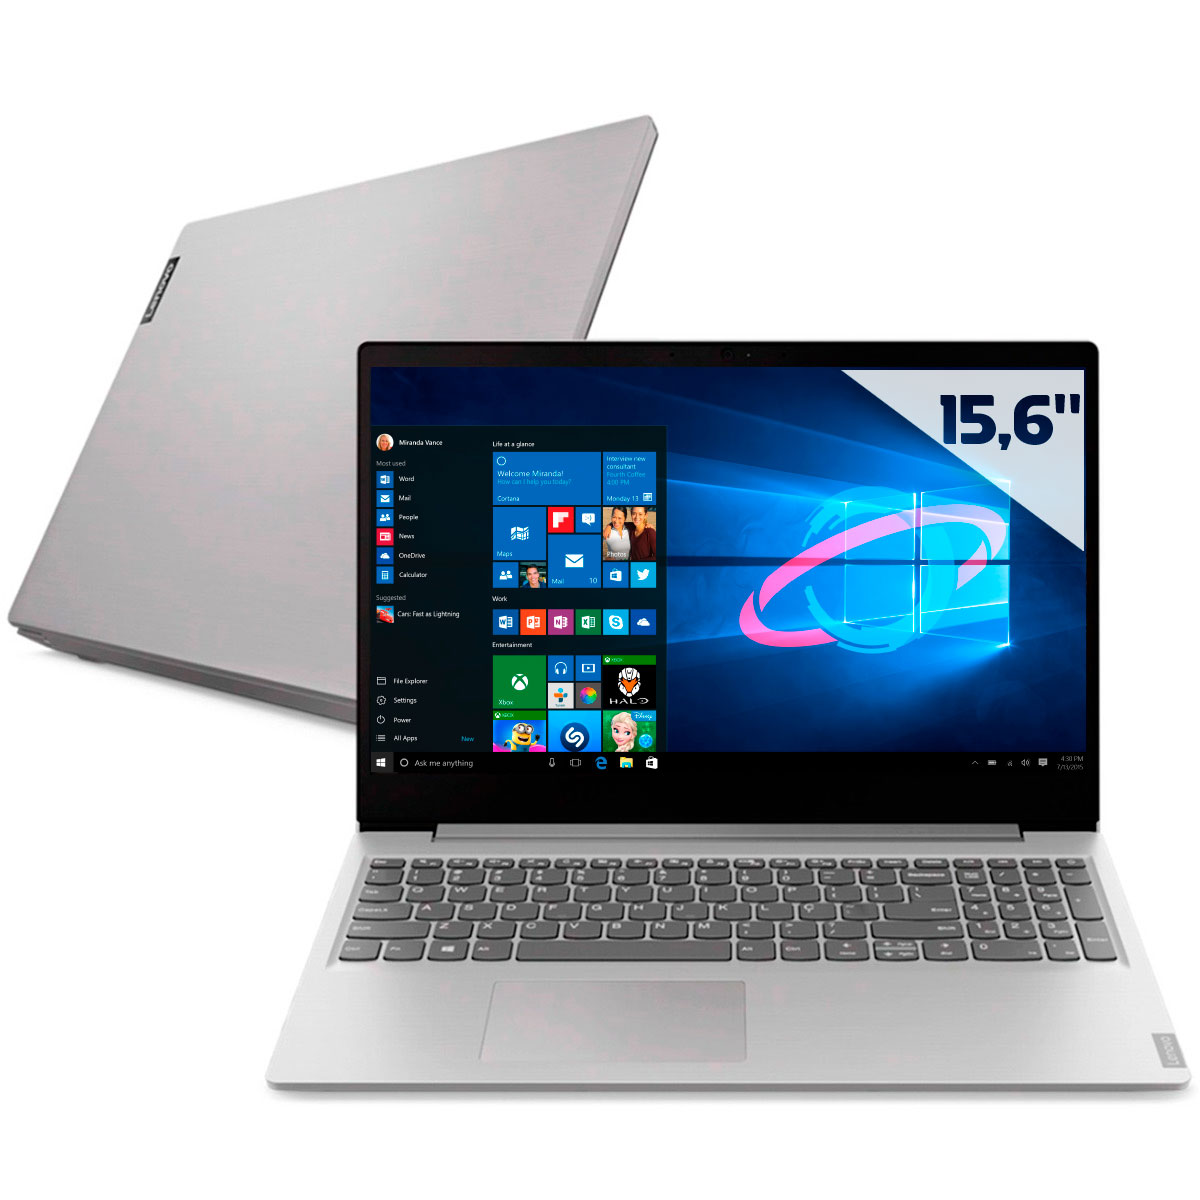 Notebook Lenovo Ideapad S145 - Intel i5 1035G1, RAM 8GB, SSD 256GB, Tela 15.6